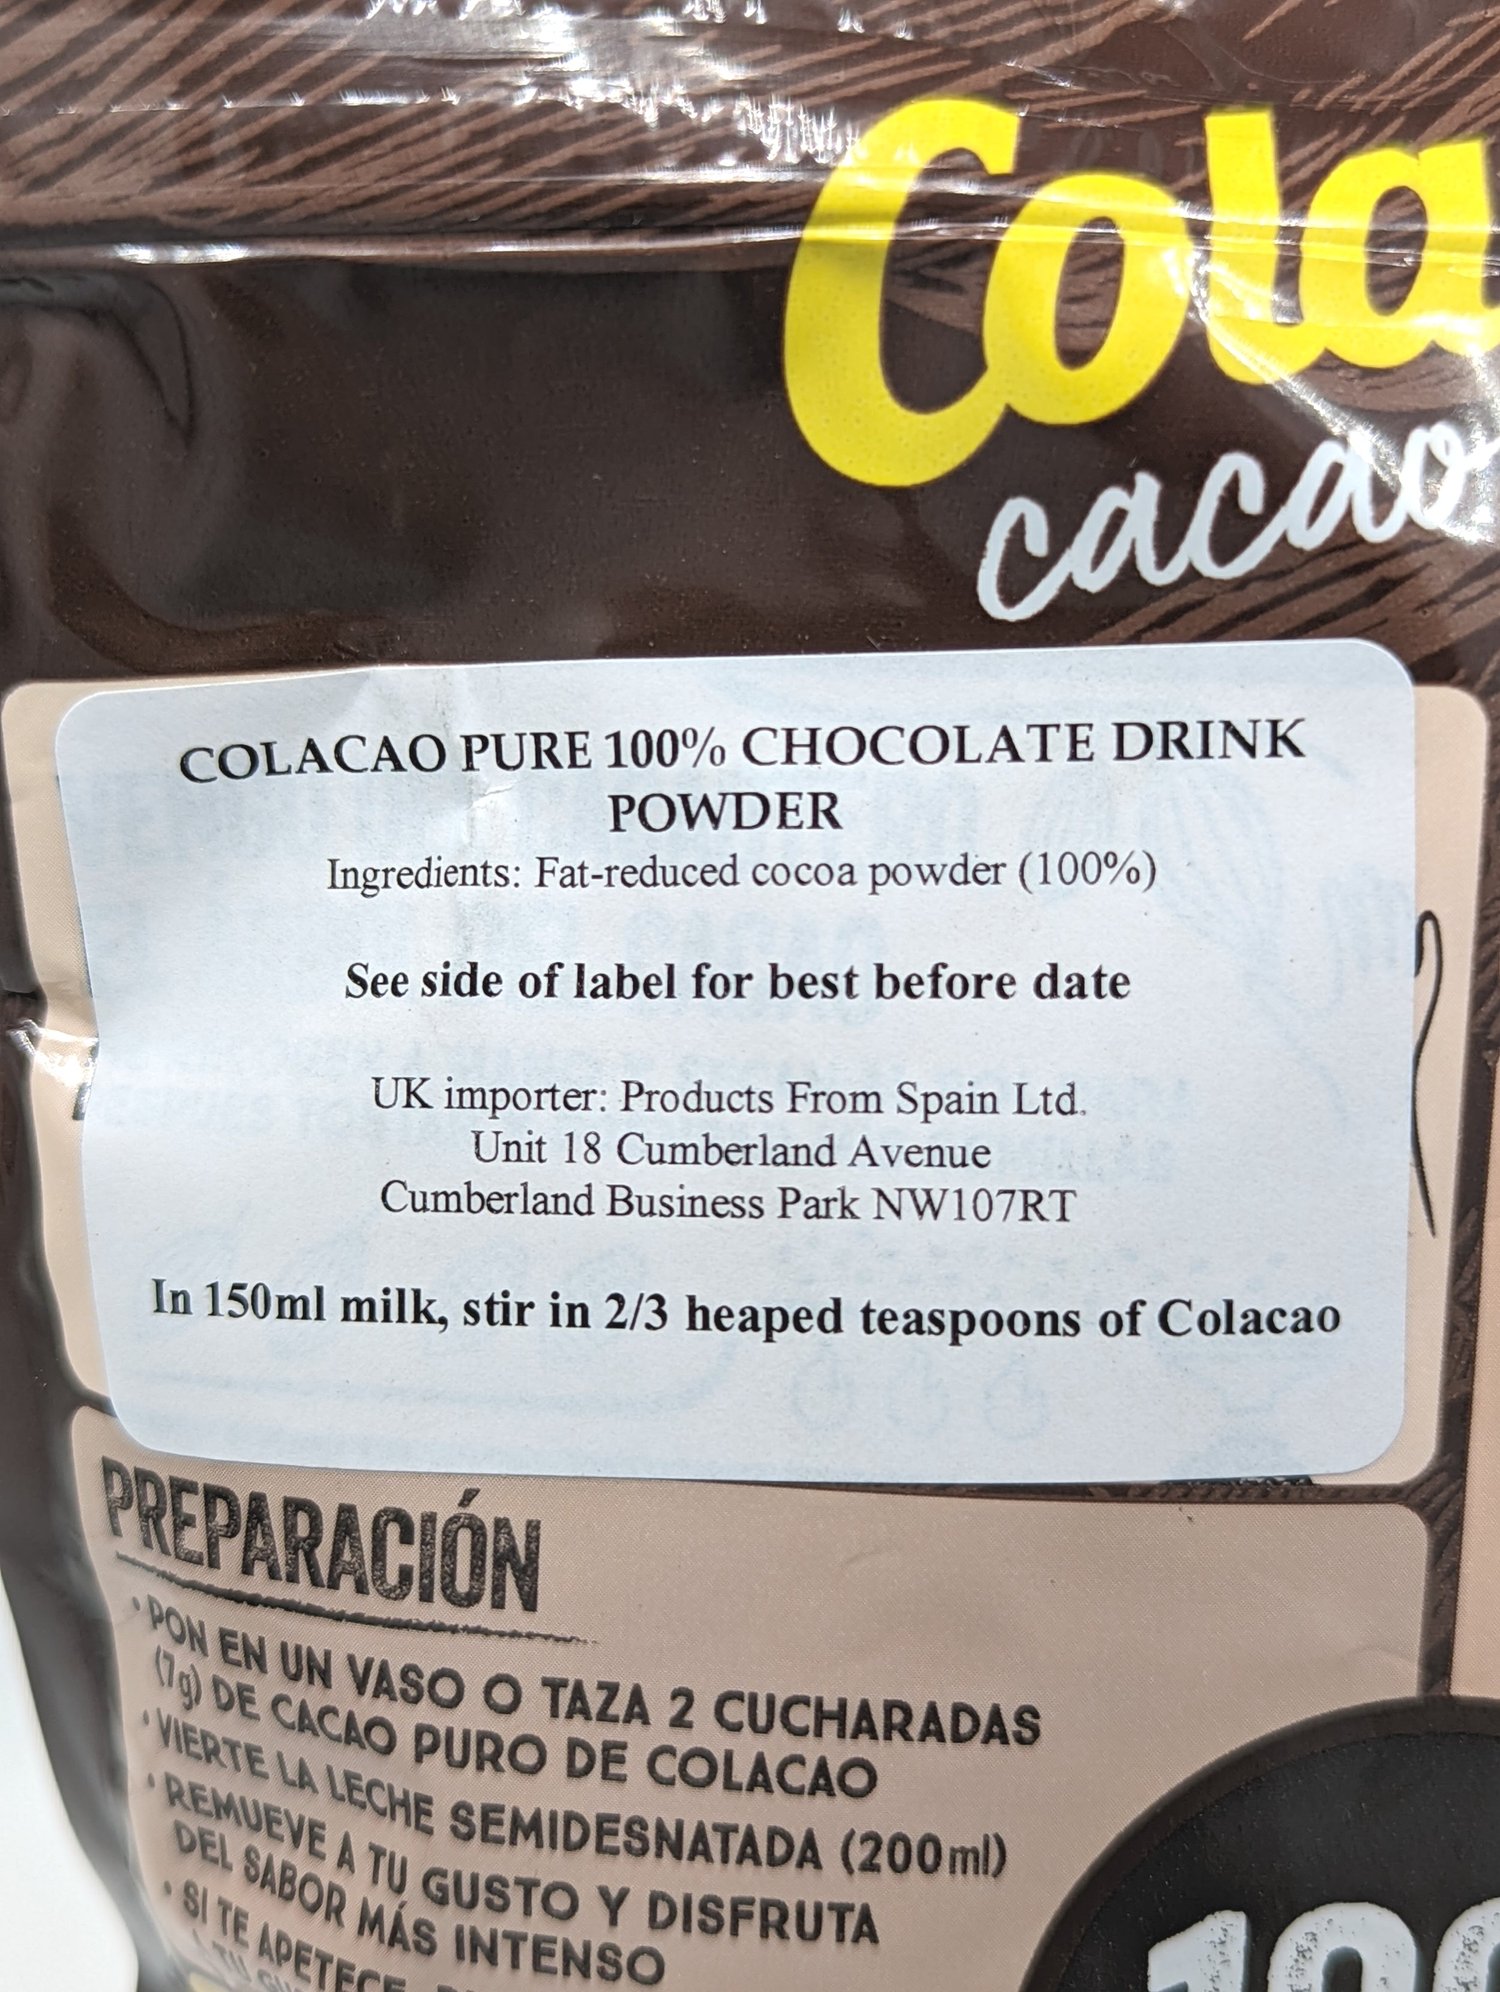 Cola Cao drink - Turbo — Omar Allibhoy - The Spanish Chef